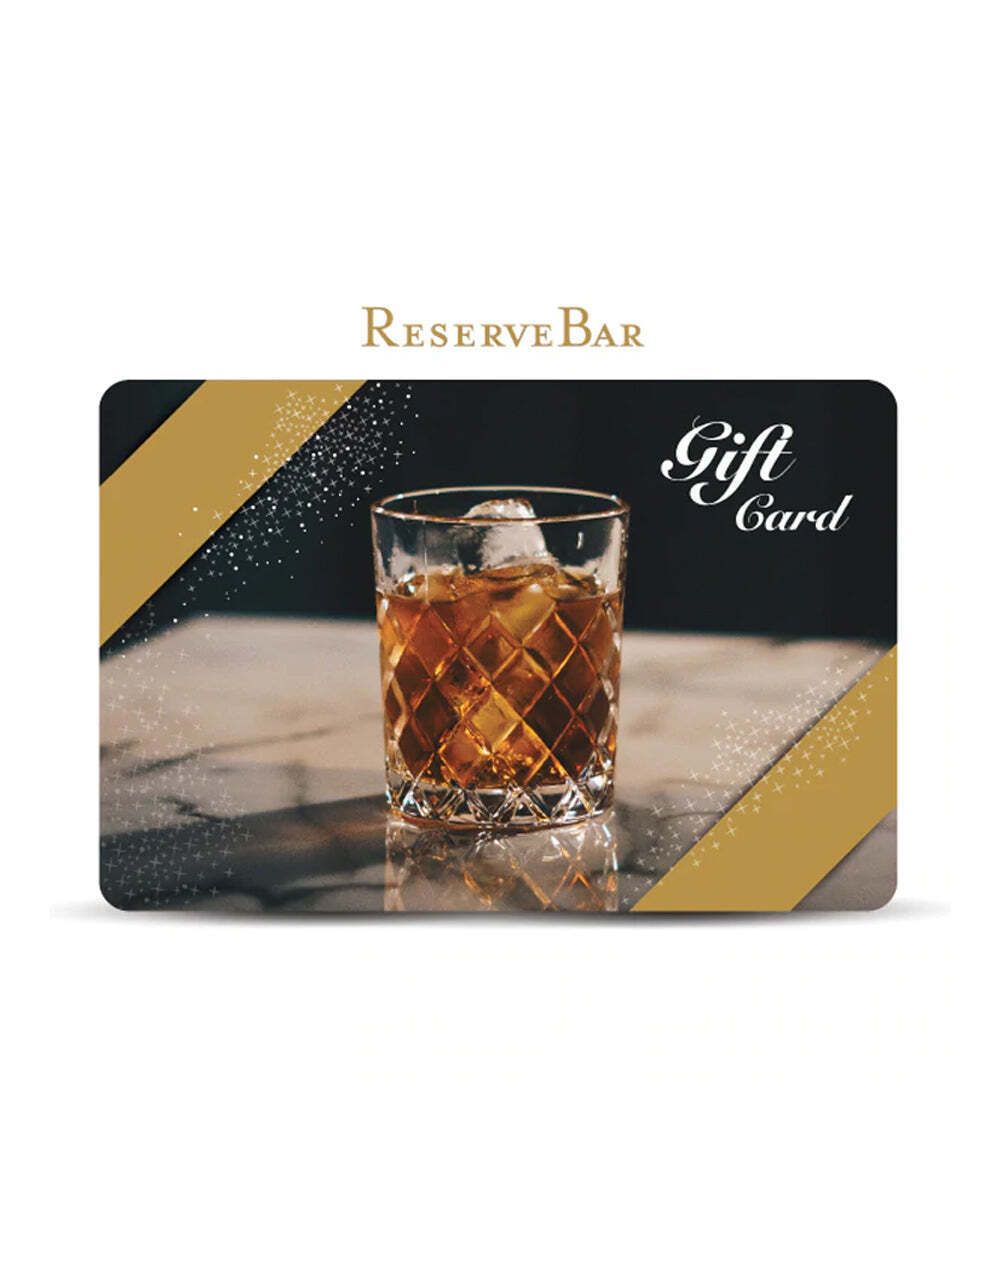 Classic ReserveBar Gift Card